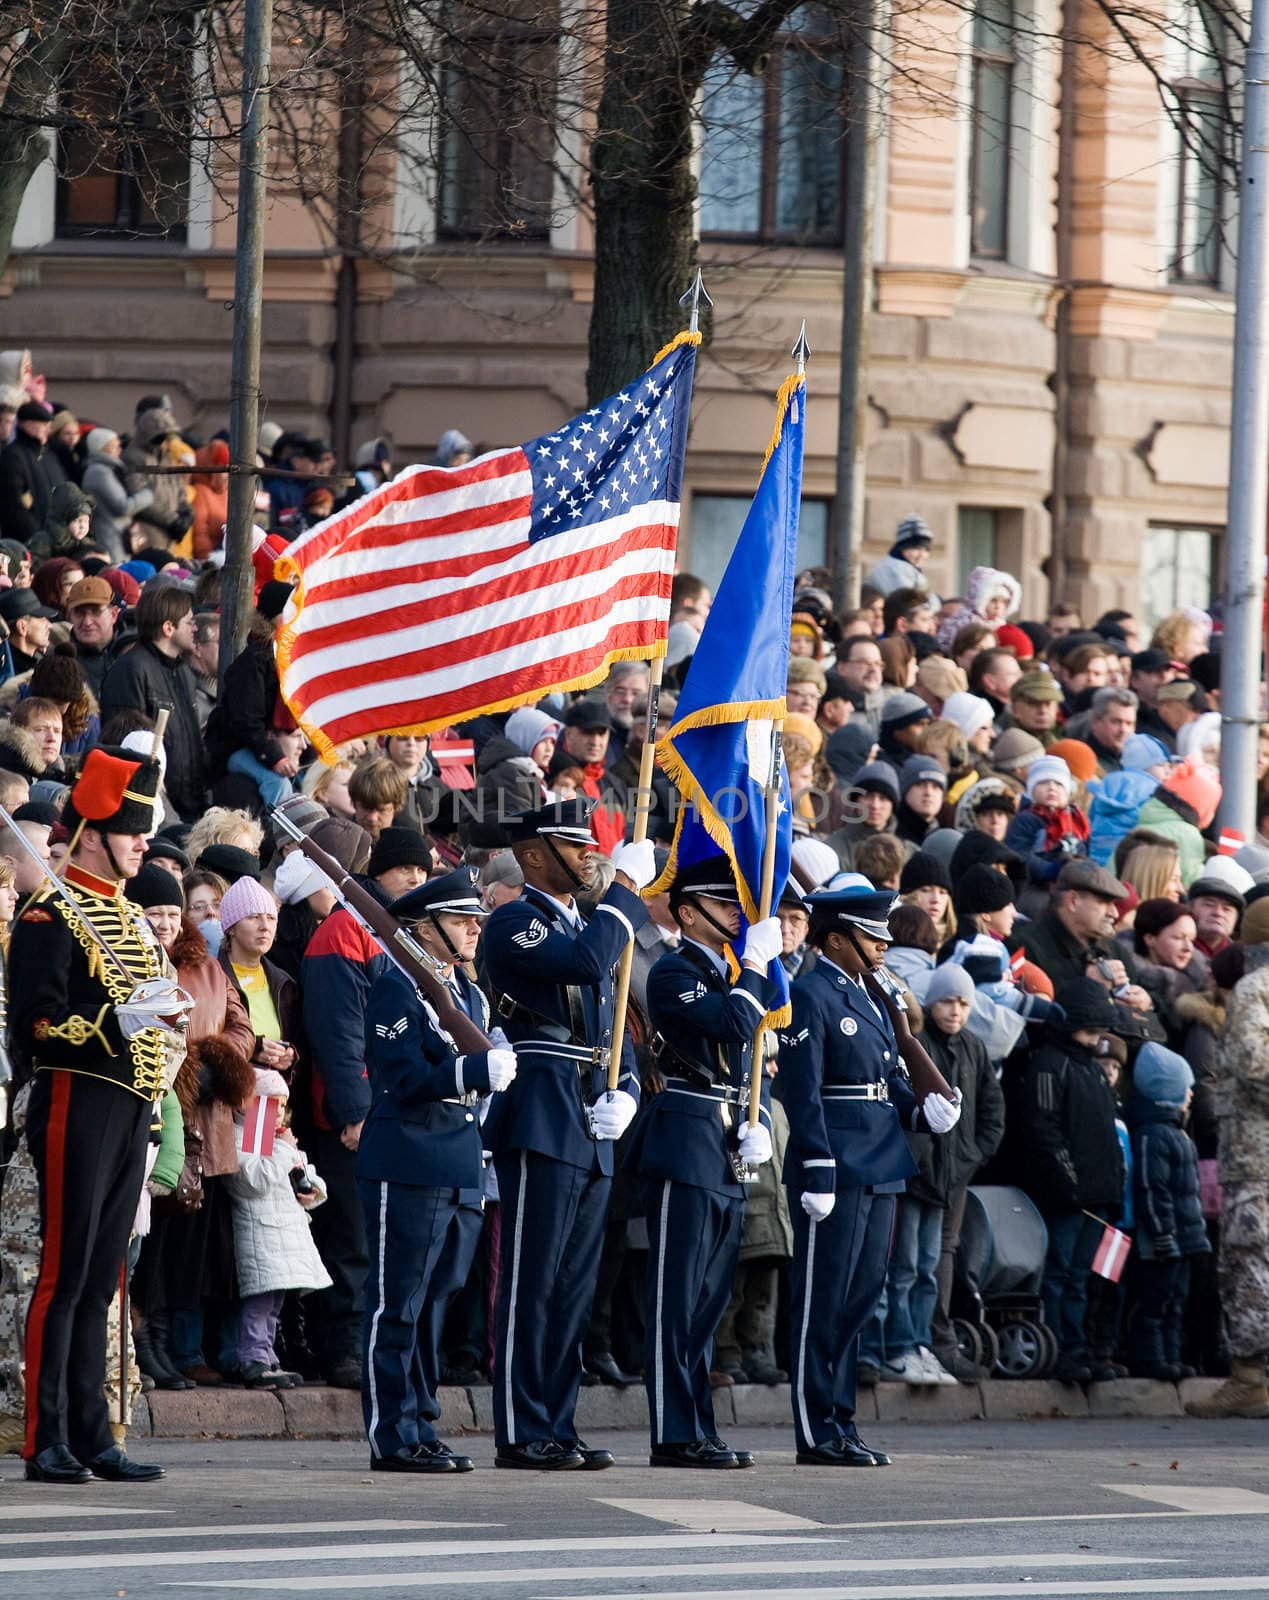 USA Color Guard at parade by ints